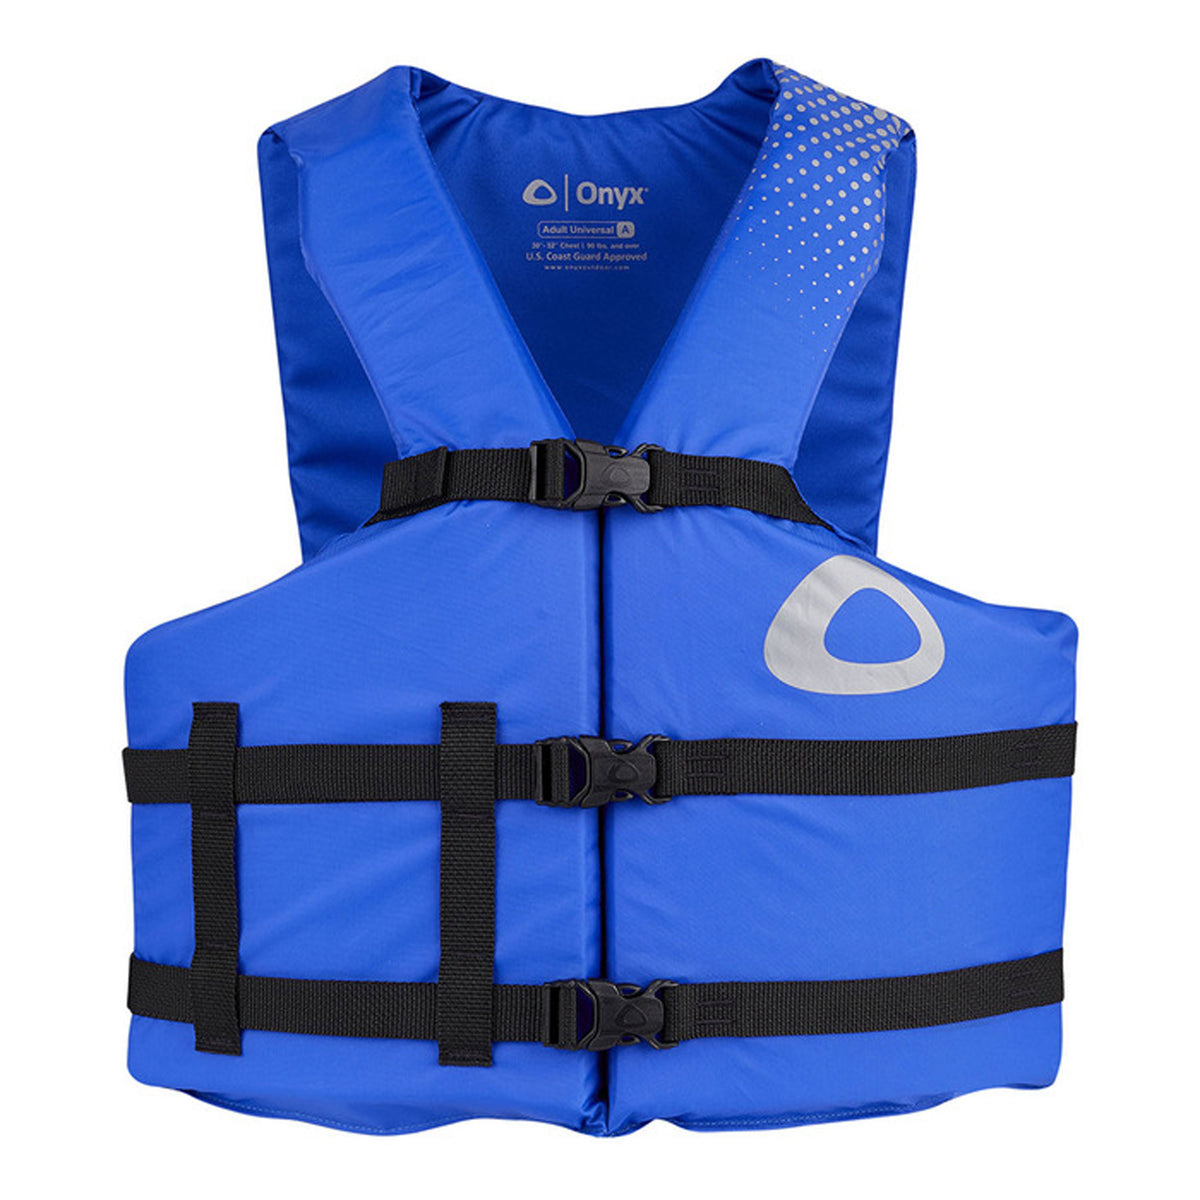 Onyx 103700-500-005-18 Adult Comfort General Purpose Vest - Blue, Oversize